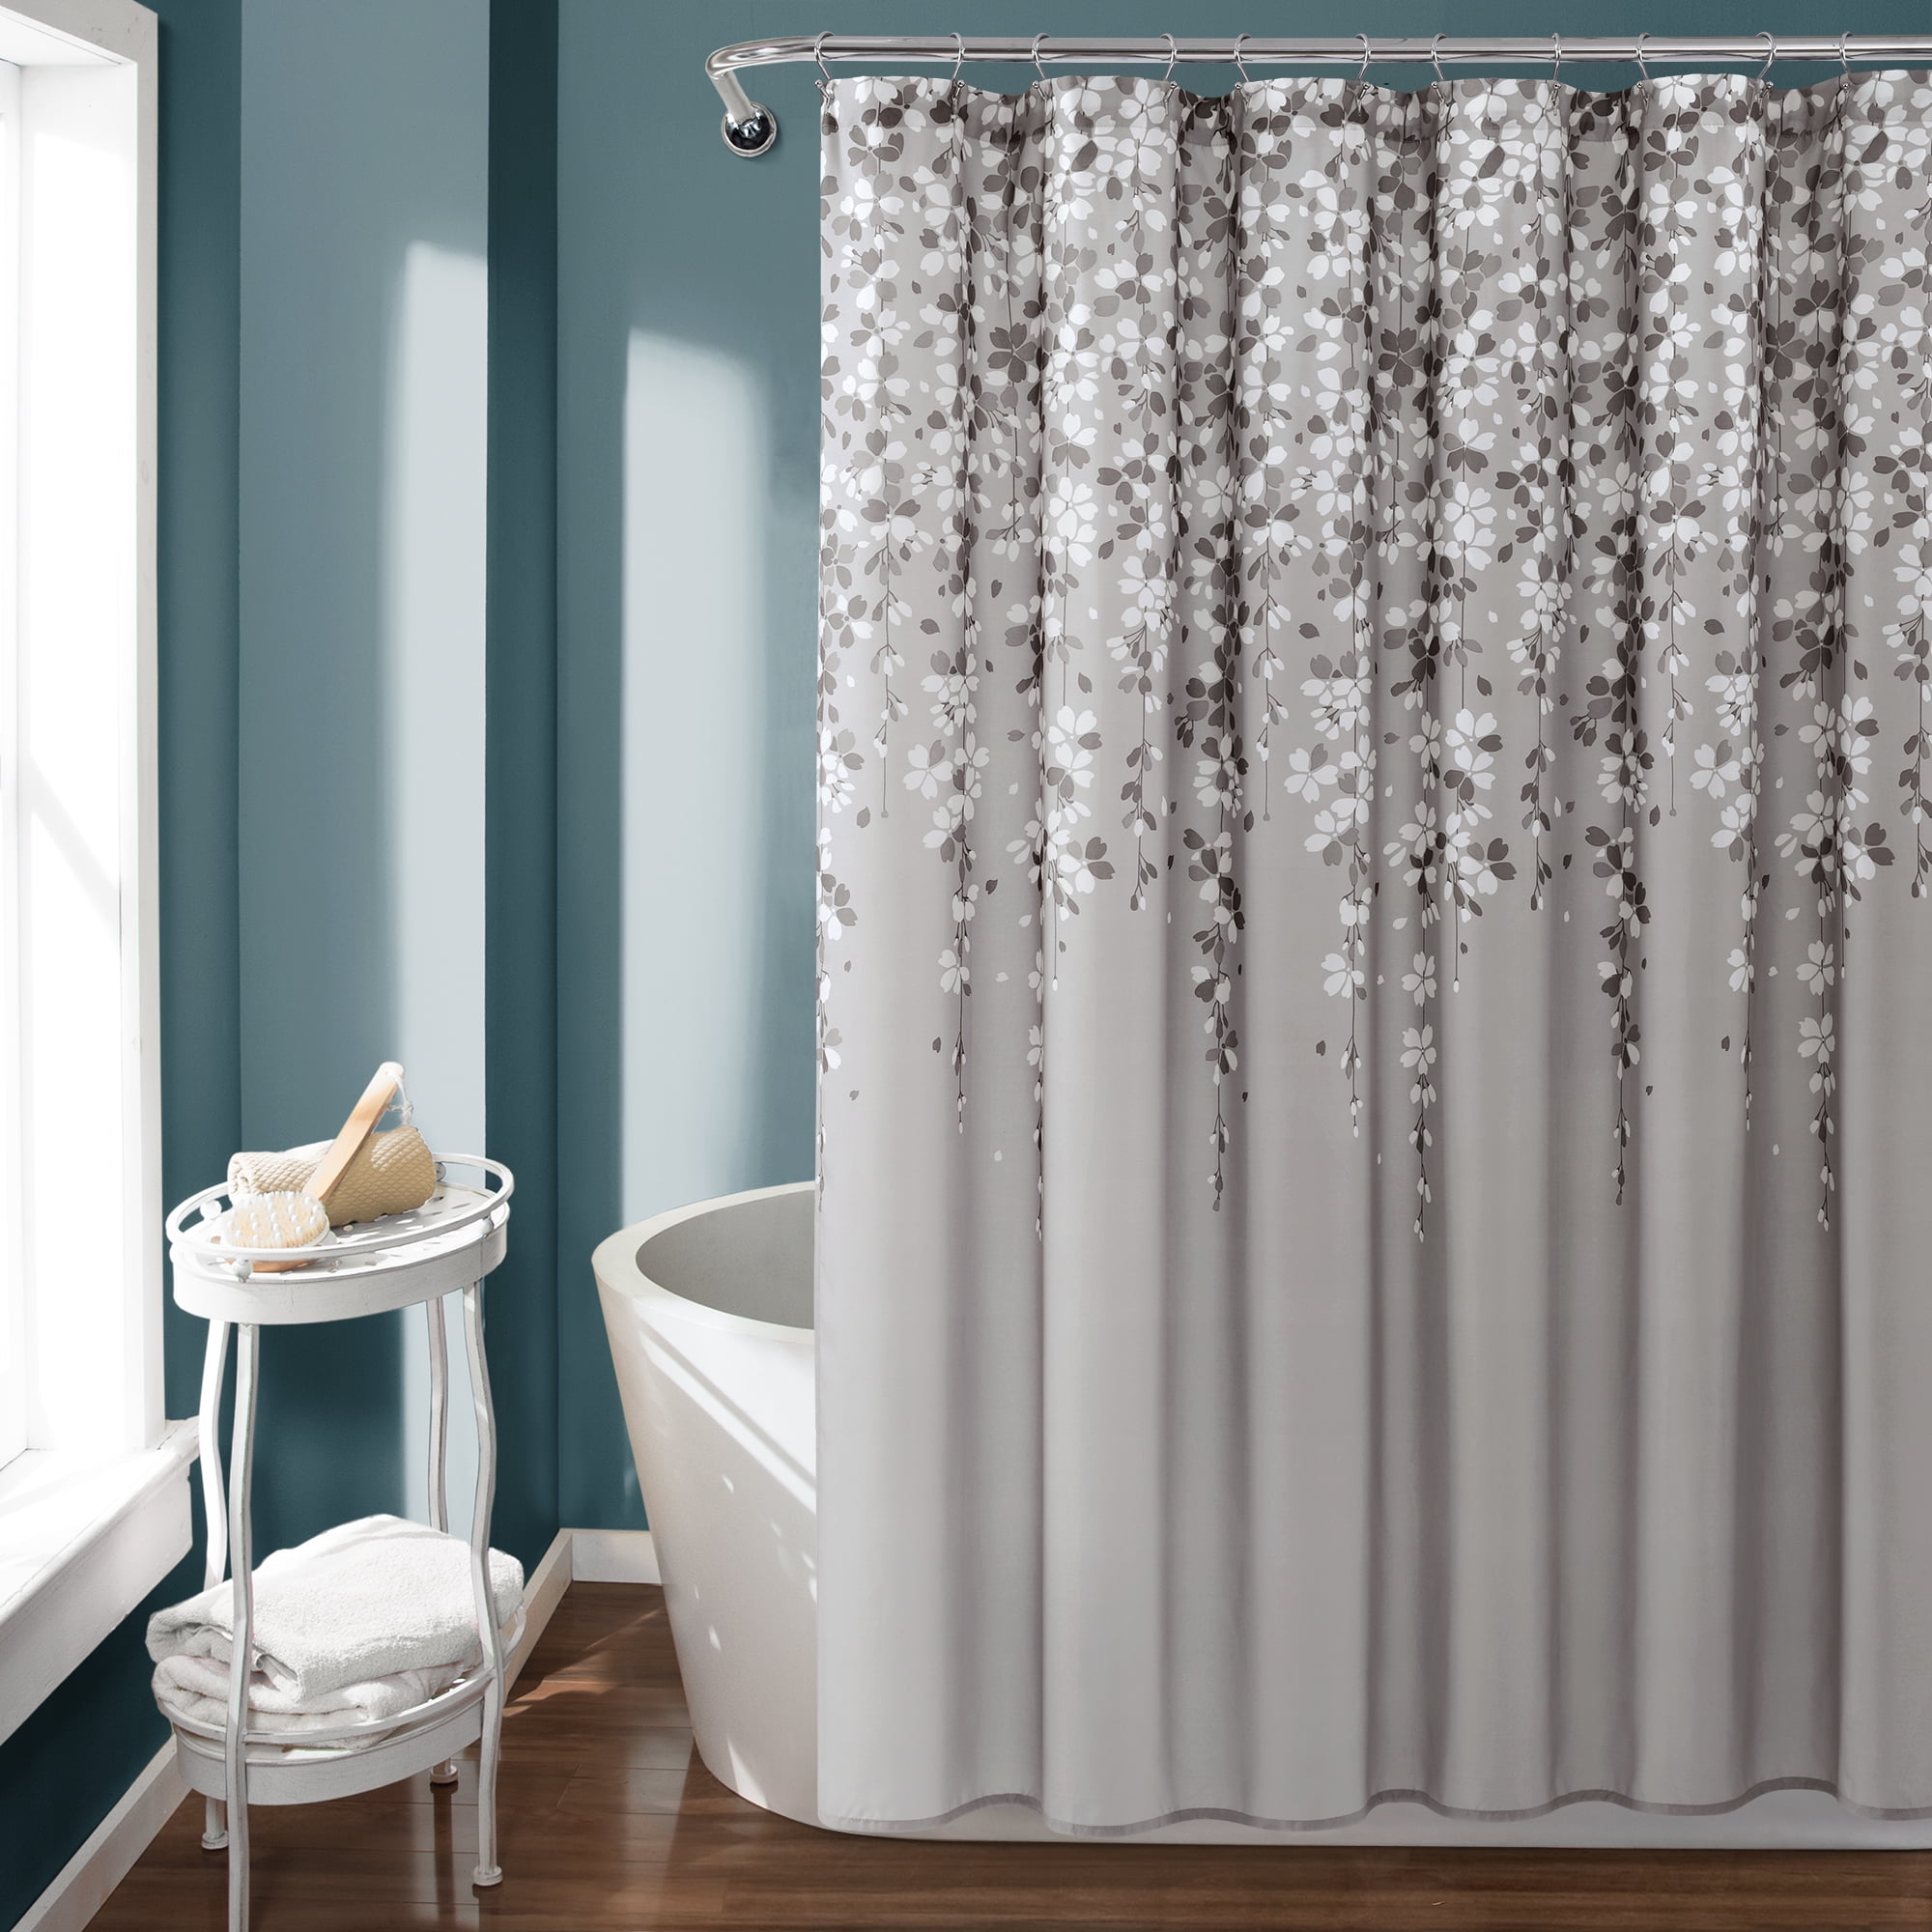 Blue White Floral Fabric Shower Curtain Cotton Machine Wash 72x72 Standard Hang 